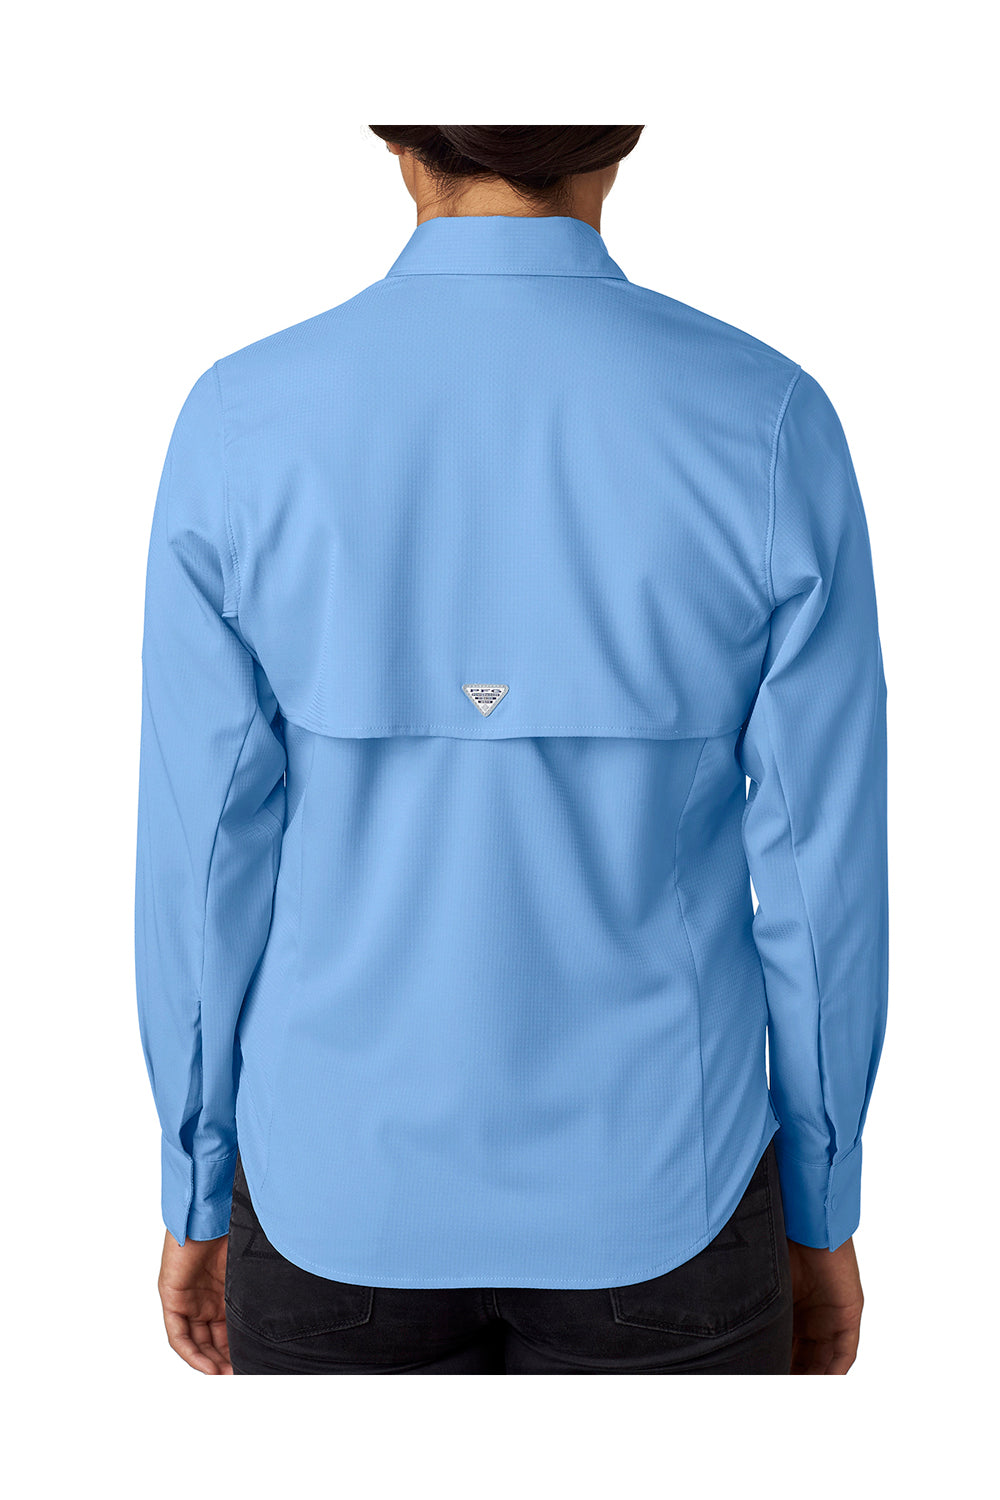 Columbia 7278 Womens Tamiami II Moisture Wicking Long Sleeve Button Down Shirt w/ Double Pockets White Cap Blue Back